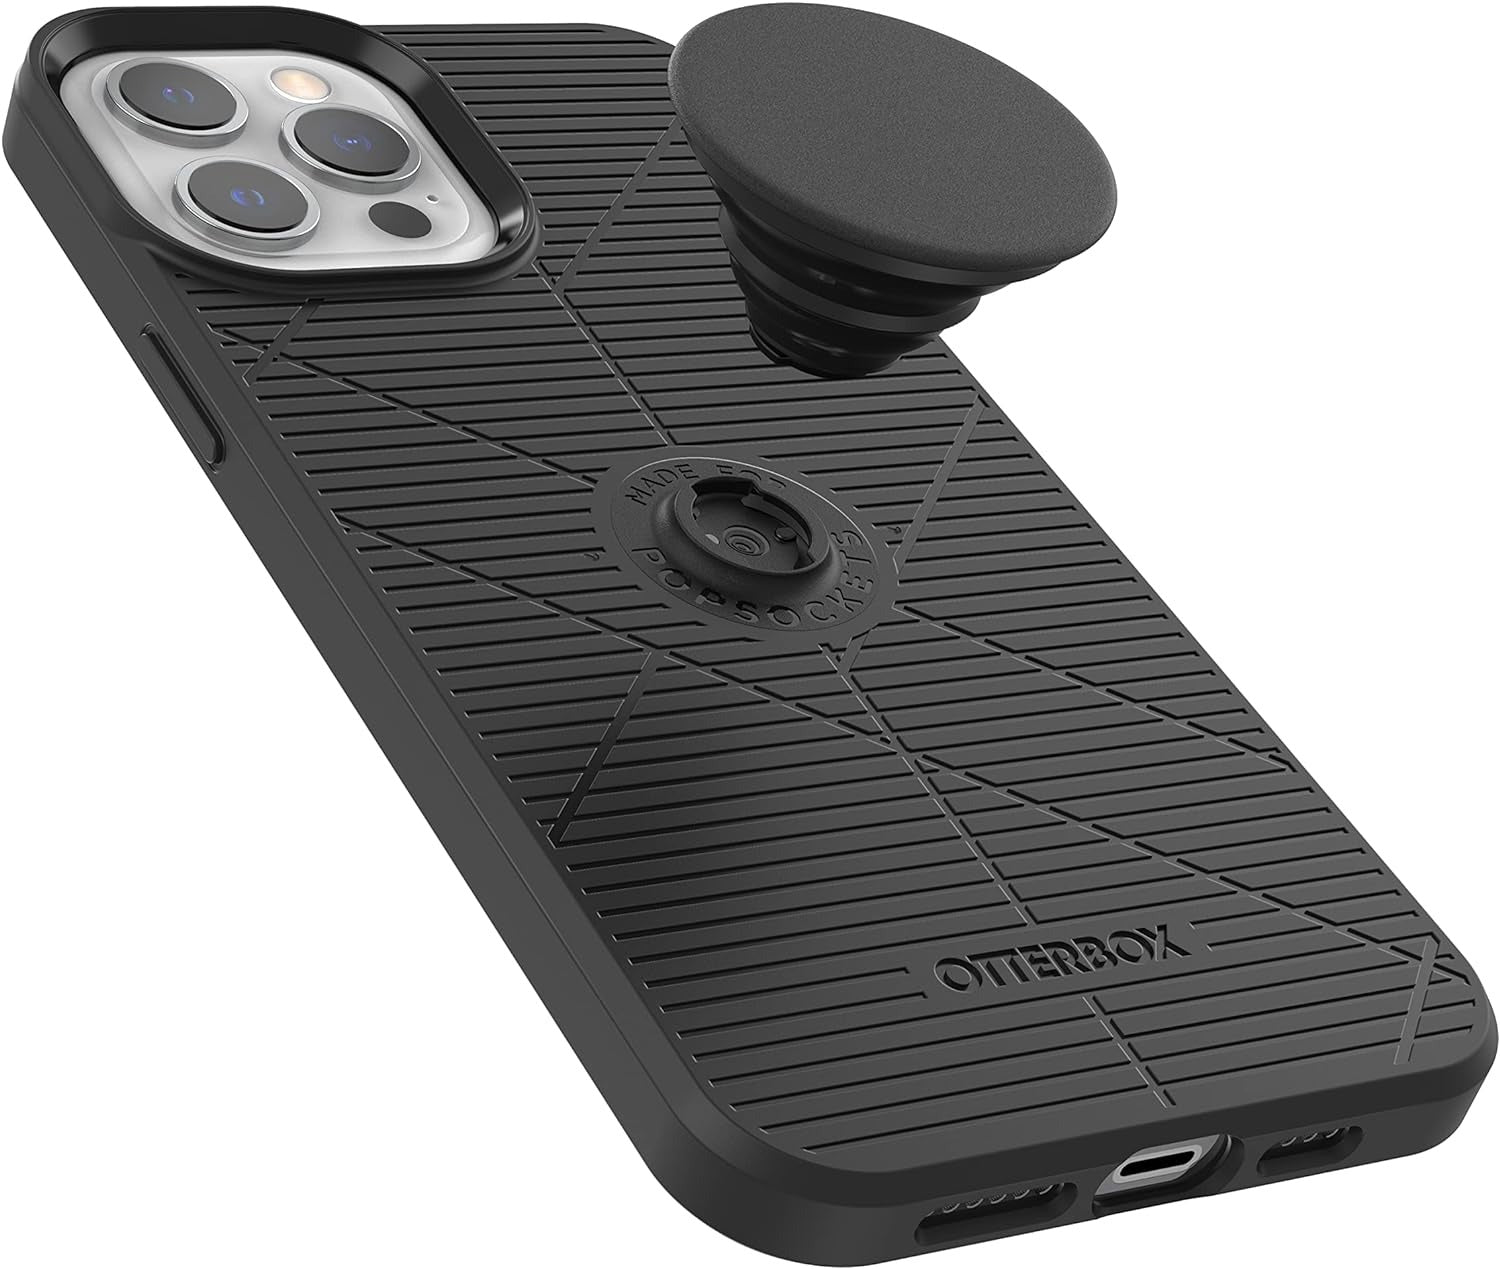 OtterBox Otter+Pop REFLEX SERIES Case for Apple iPhone 12 Pro Max - Black (New)